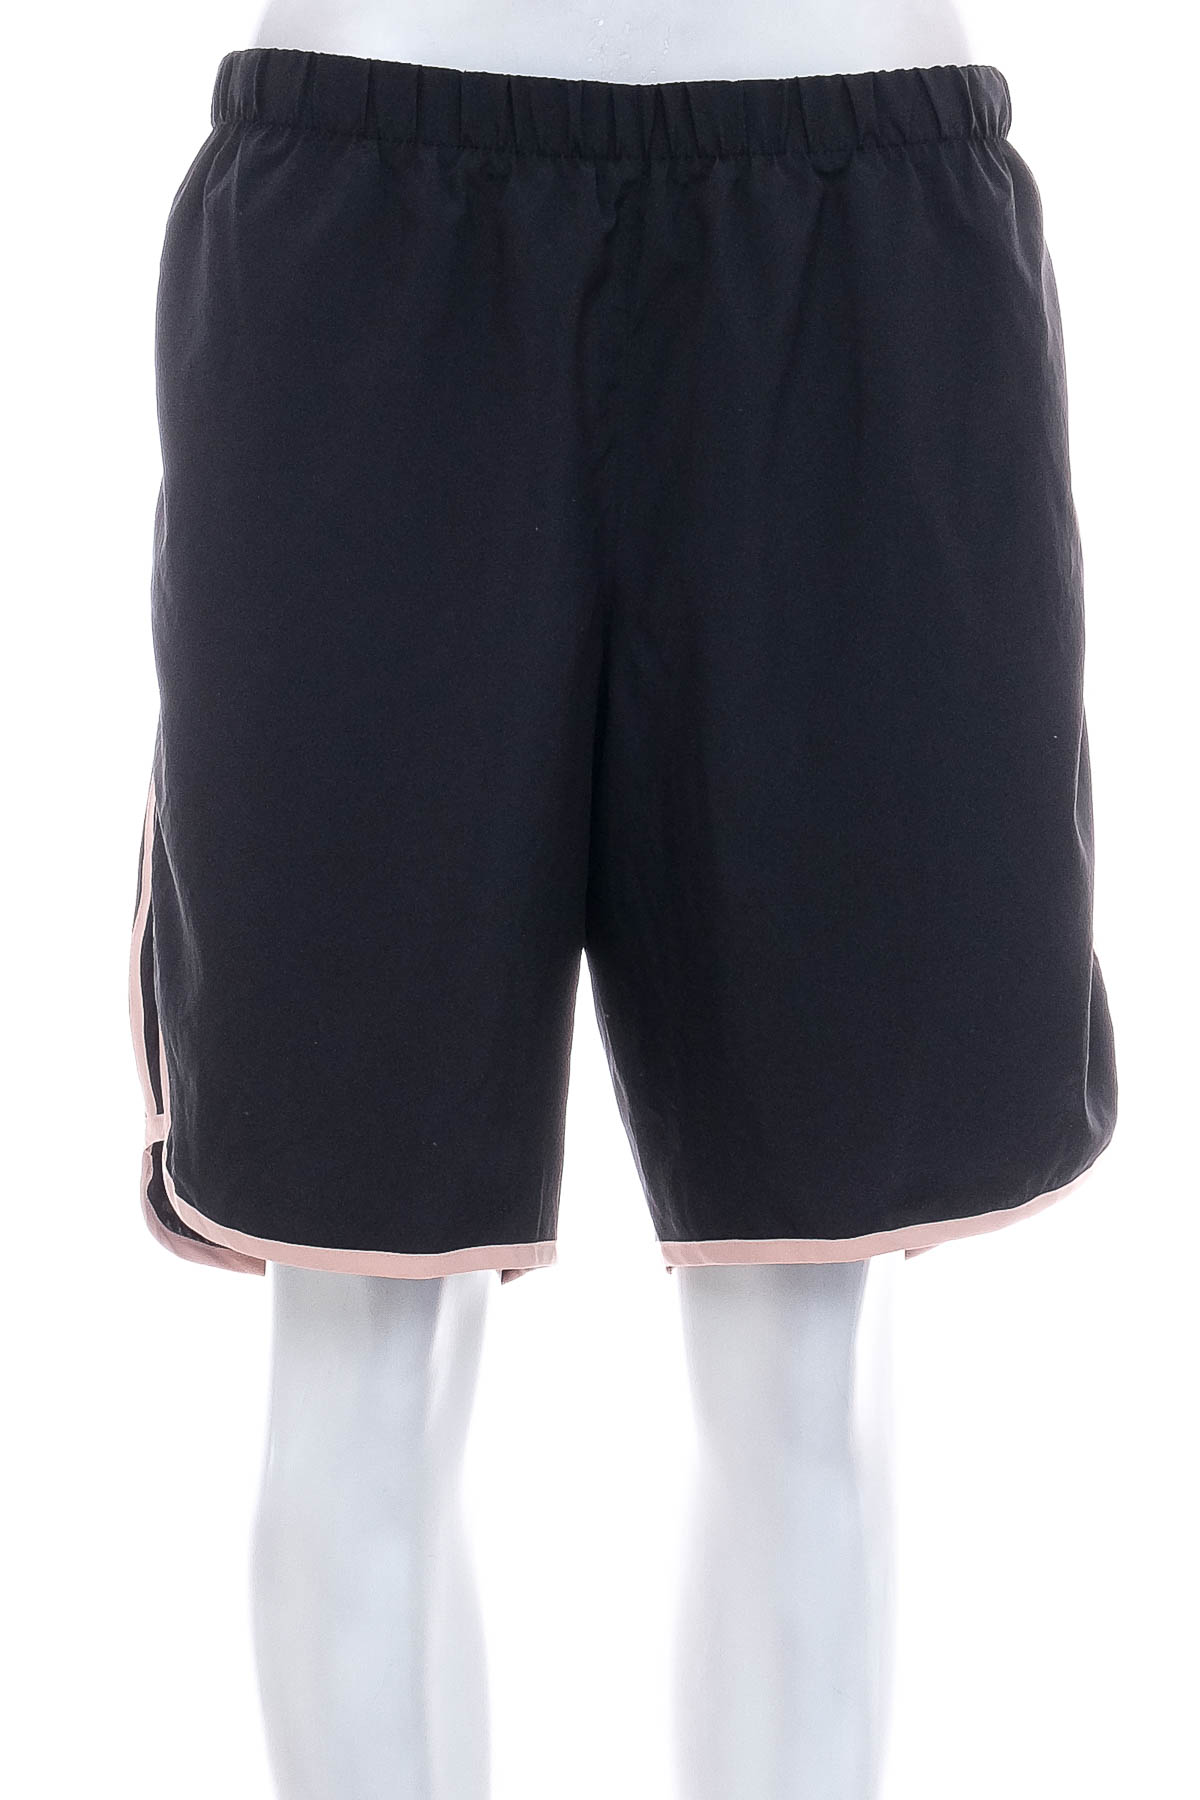 Women's shorts - Adidas - 0